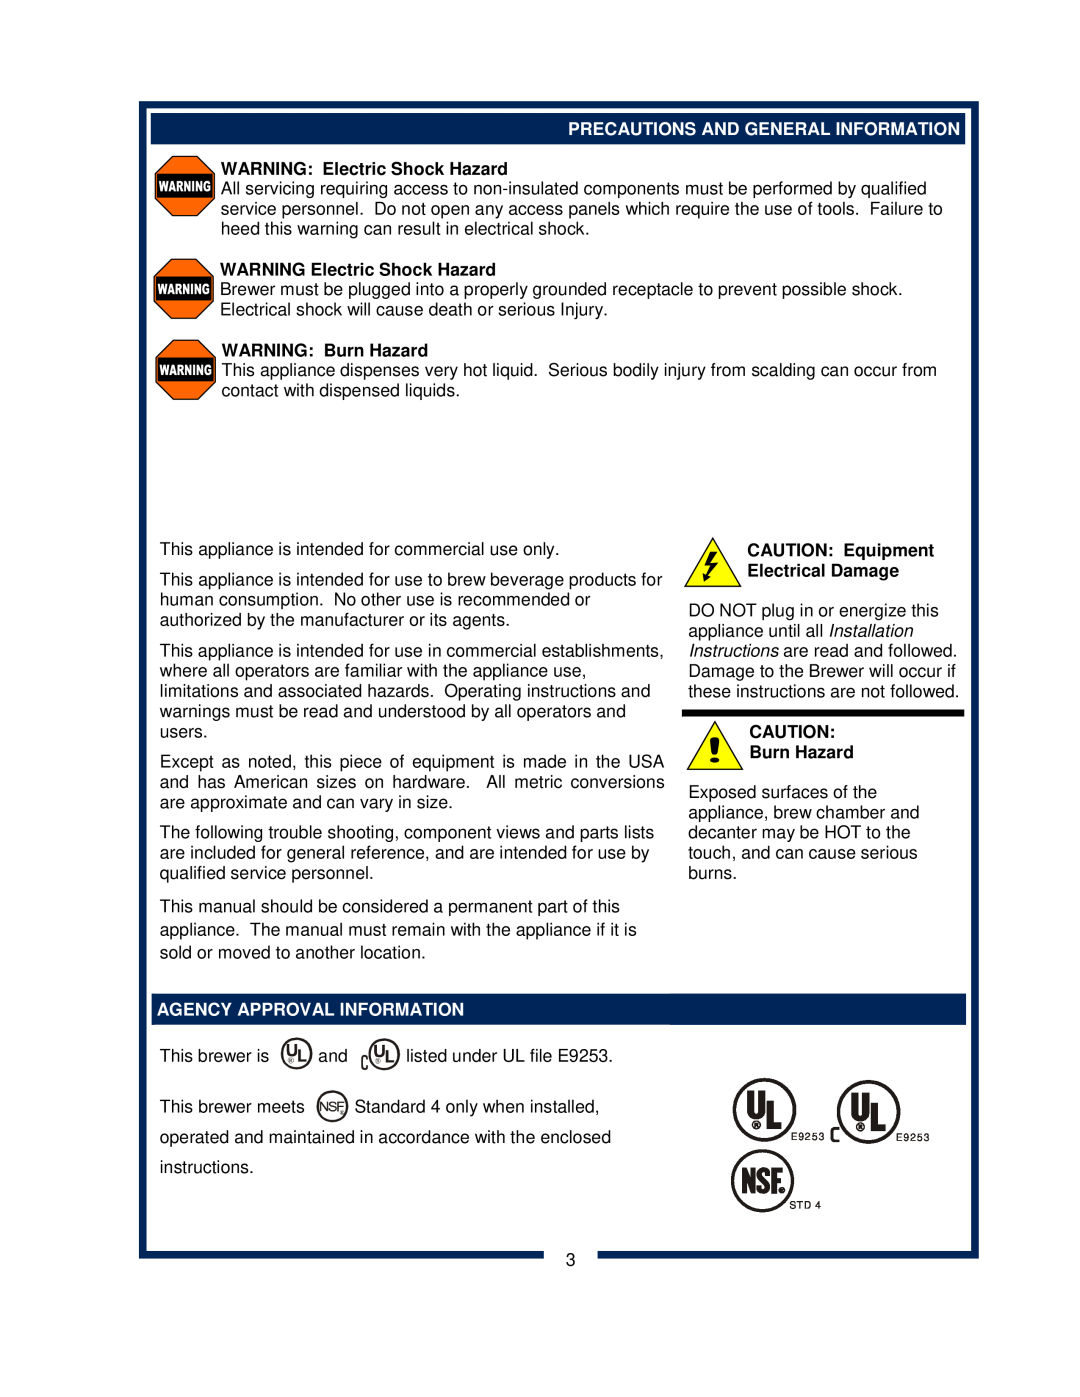 Bloomfield 8372 owner manual Precautions And General Information, WARNING Electric Shock Hazard, WARNING Burn Hazard 